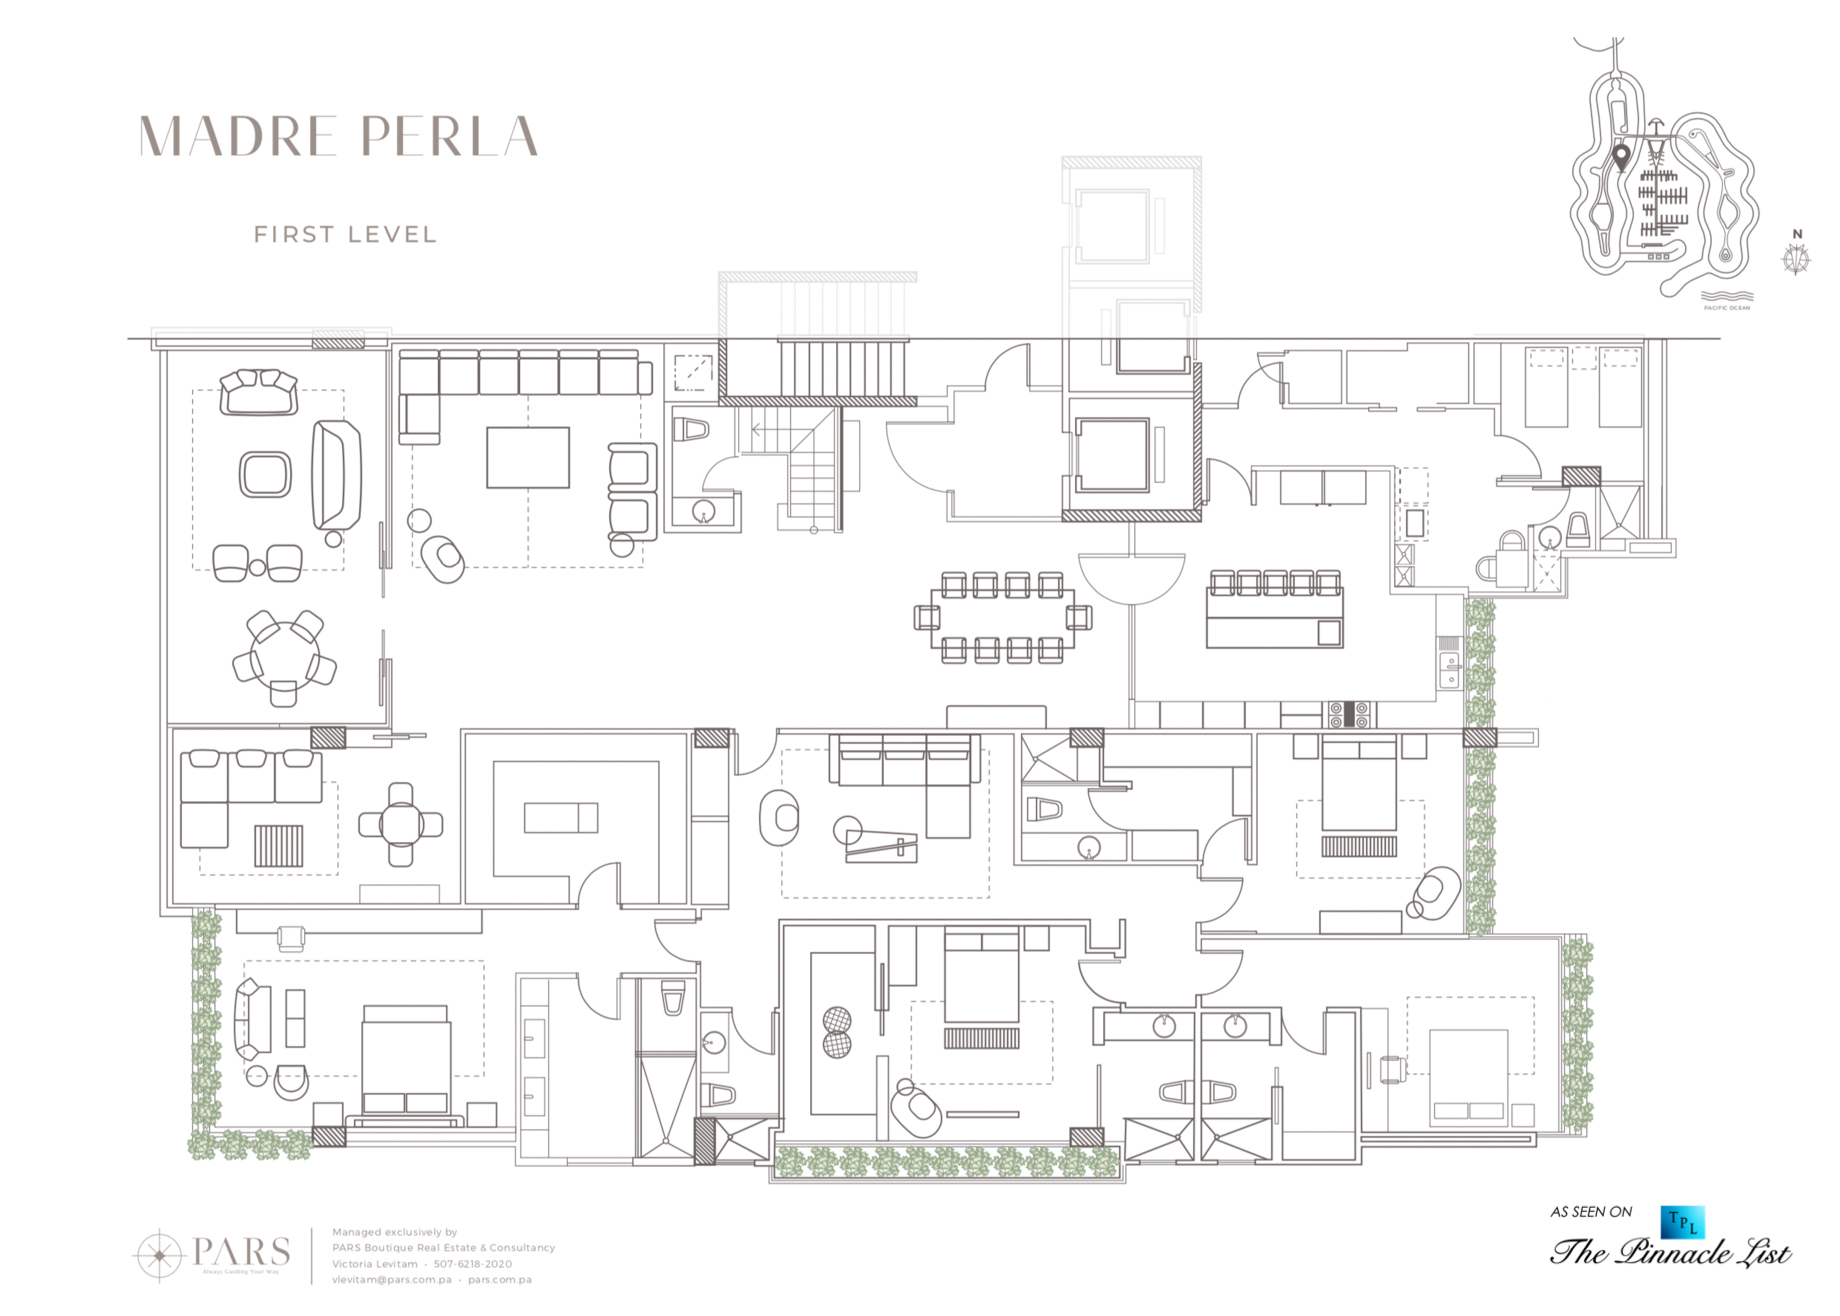 Madre Perla Penthouse - Ocean Reef Island, Panama - First Level Floor Plan